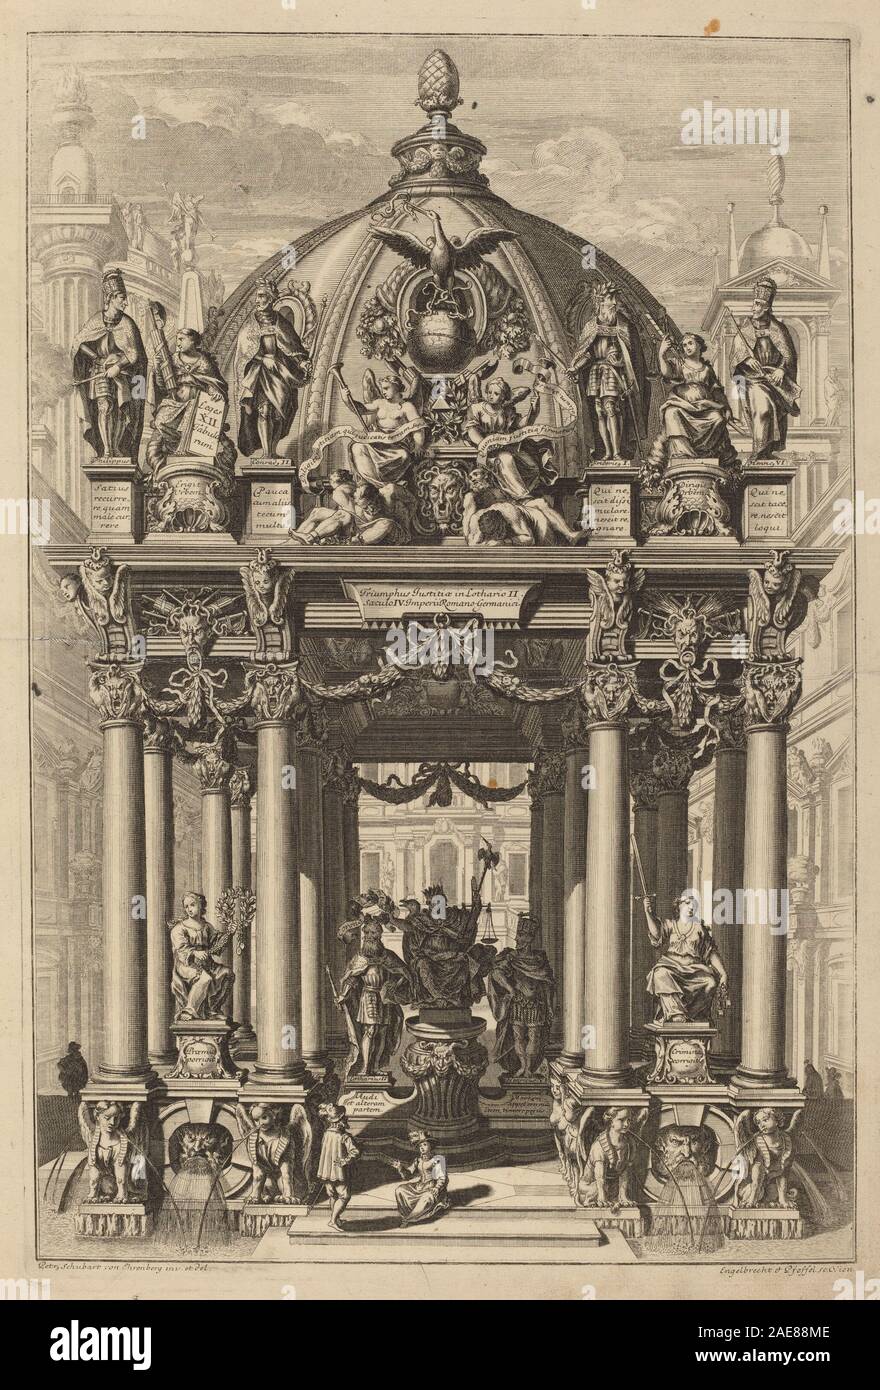 Arco trionfale per Lotharius II; 1725data Engelbrecht cristiana e Johann Andreas Pfeffel, dopo Peter Schubert von Ehrenberg, arco trionfale per Lotharius II, 1725 Foto Stock